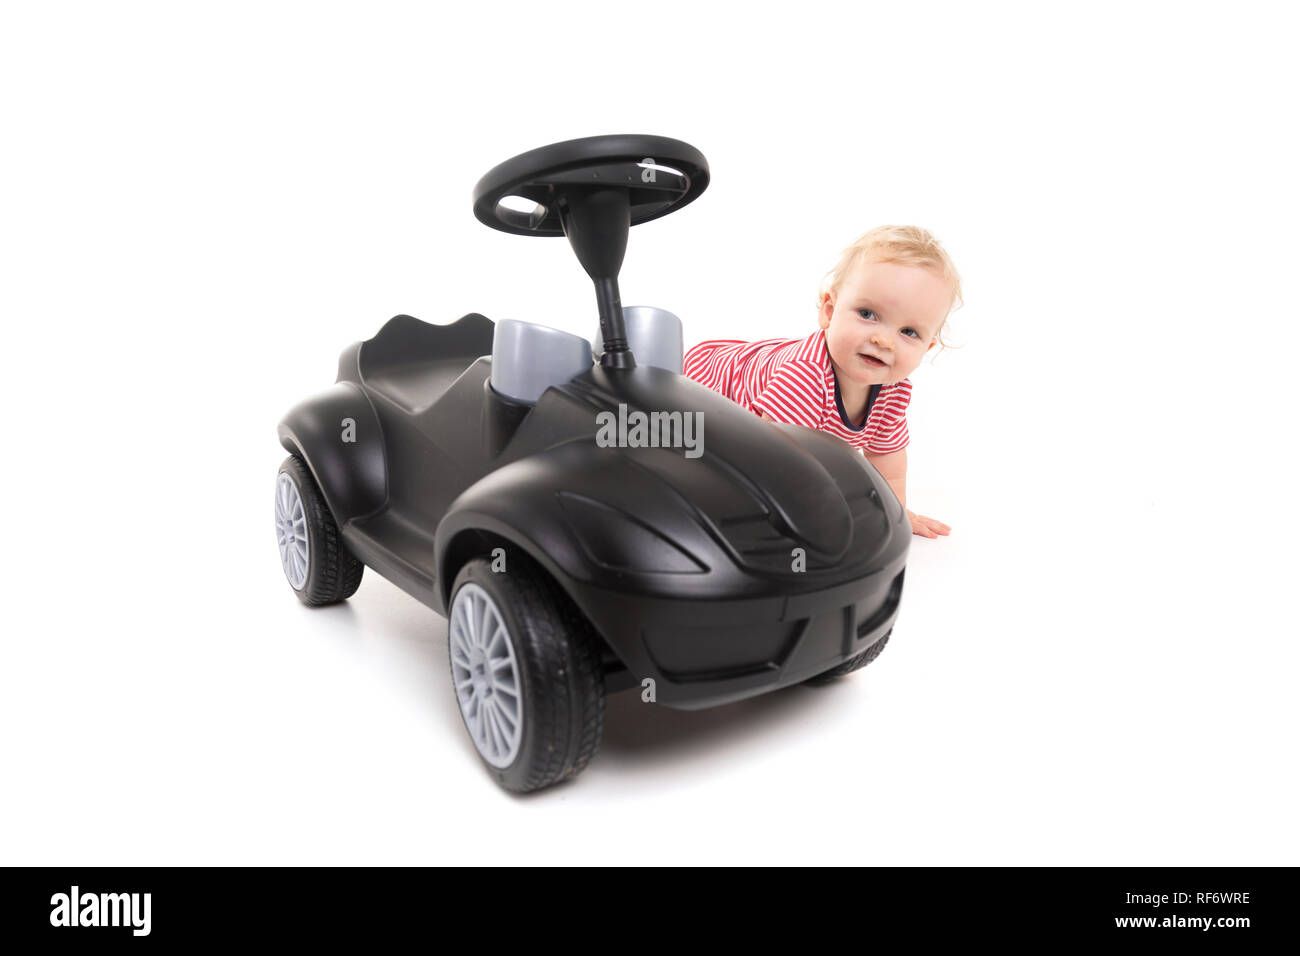 Baby next to Black toy car isolated on white background Stock Photo - Alamy